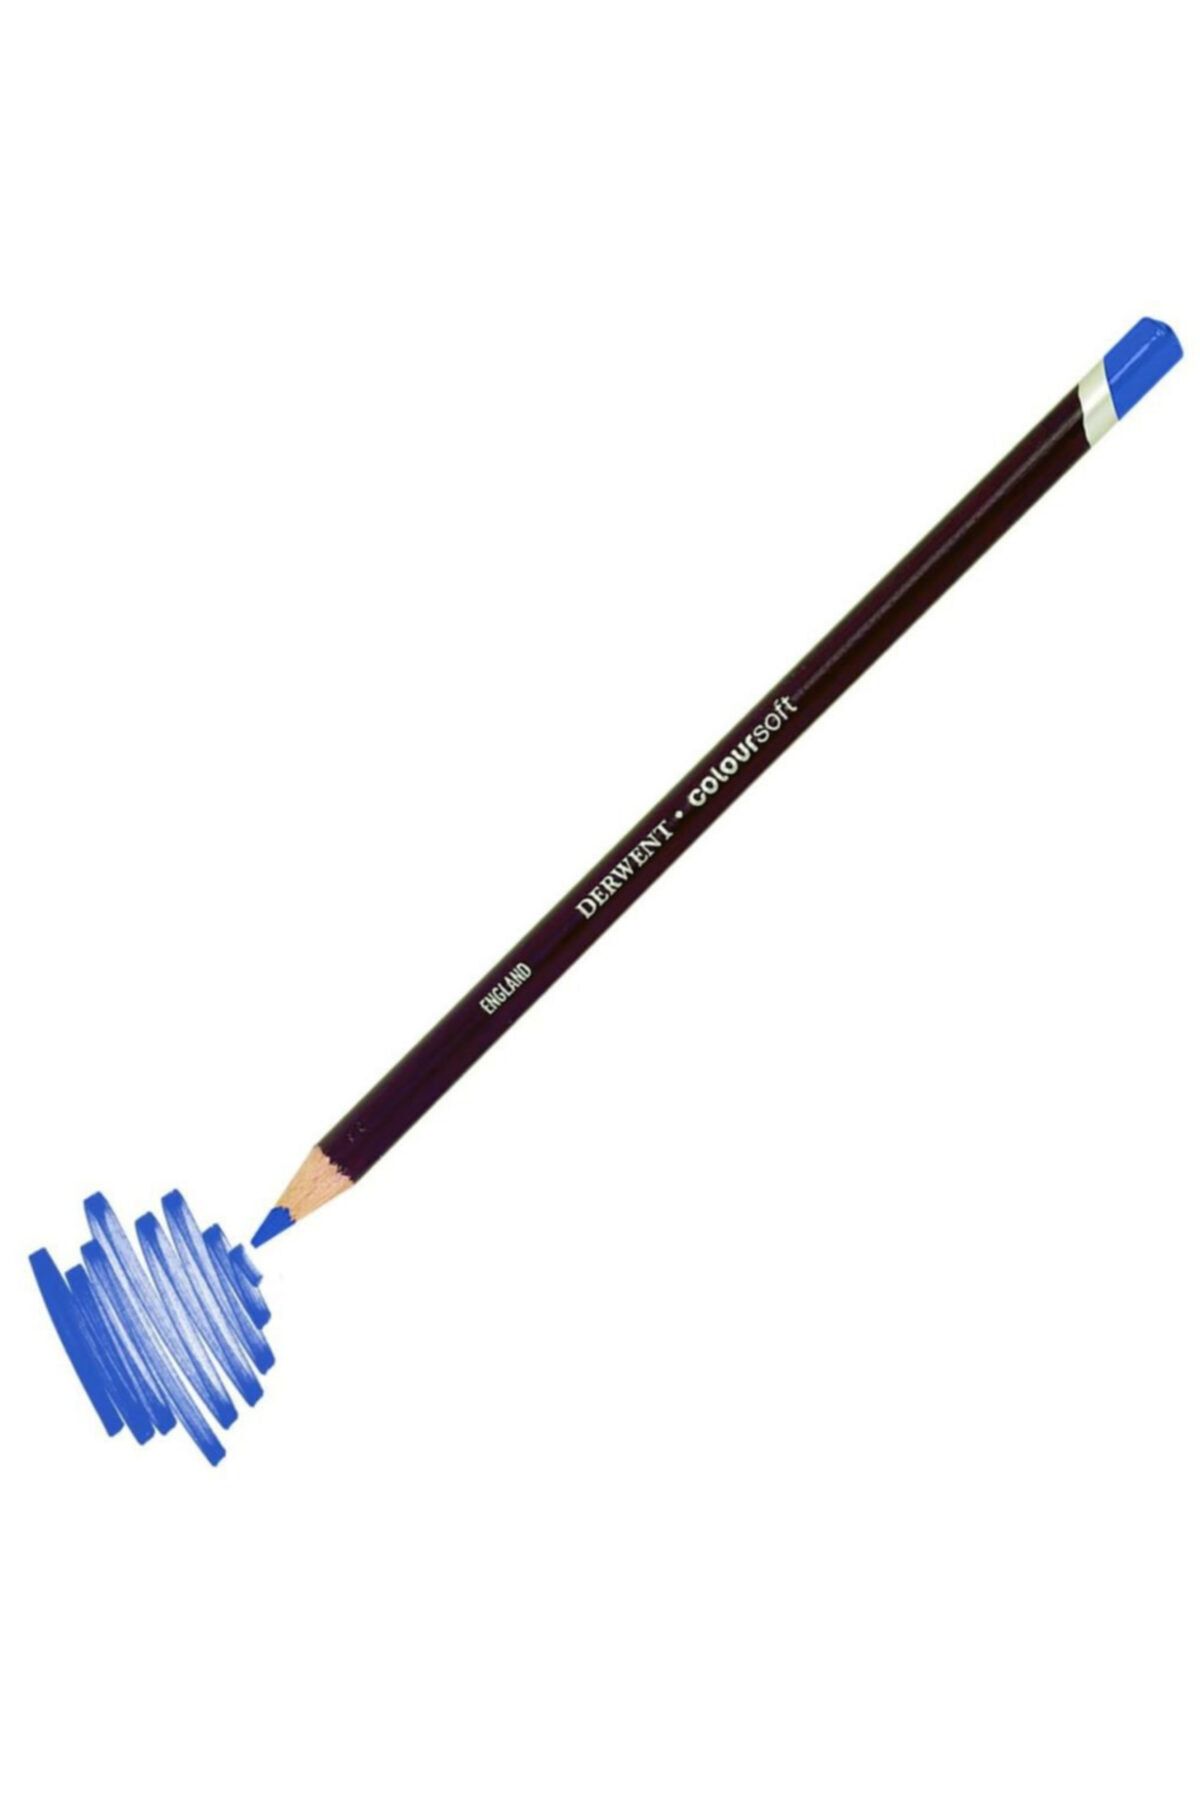 Derwent Coloursoft Pencil Yumuşak Kuru Boya Kalemi C290 Ultramarine